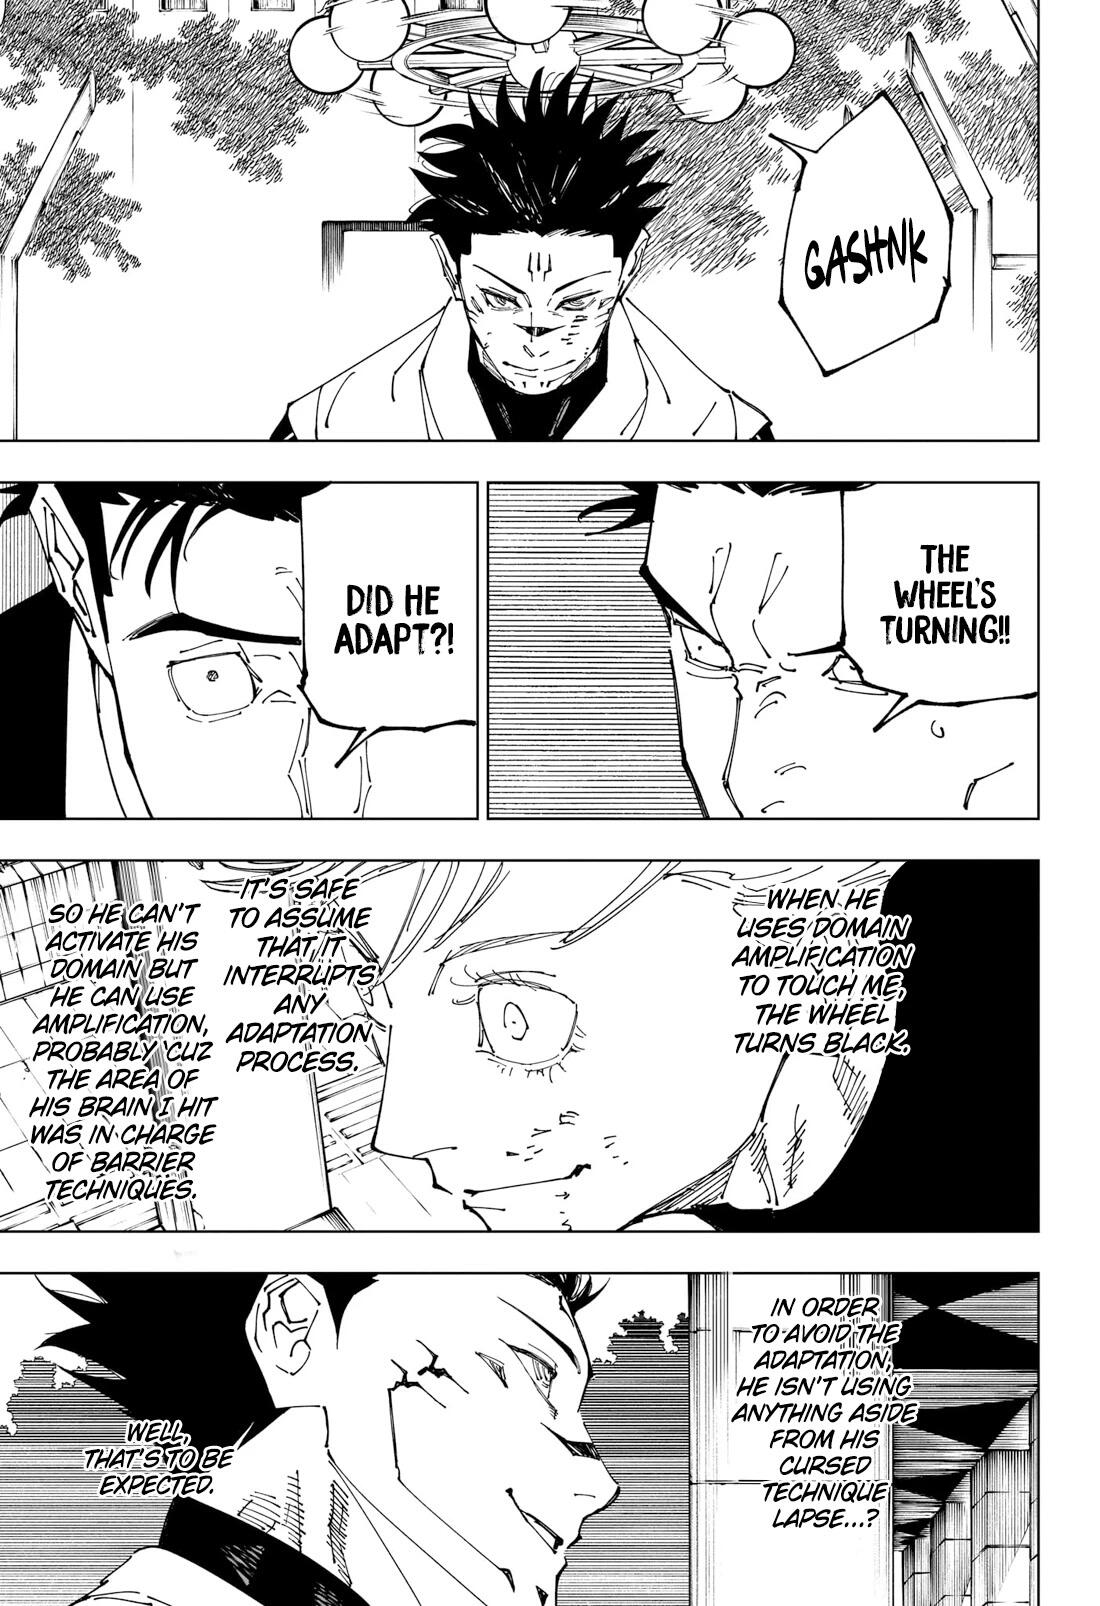 Jujutsu Kaisen Chapter 231: The Decisive Battle In The Uninhabited, Demon-Infested Shinjuku ⑨ page 13 - Mangakakalot